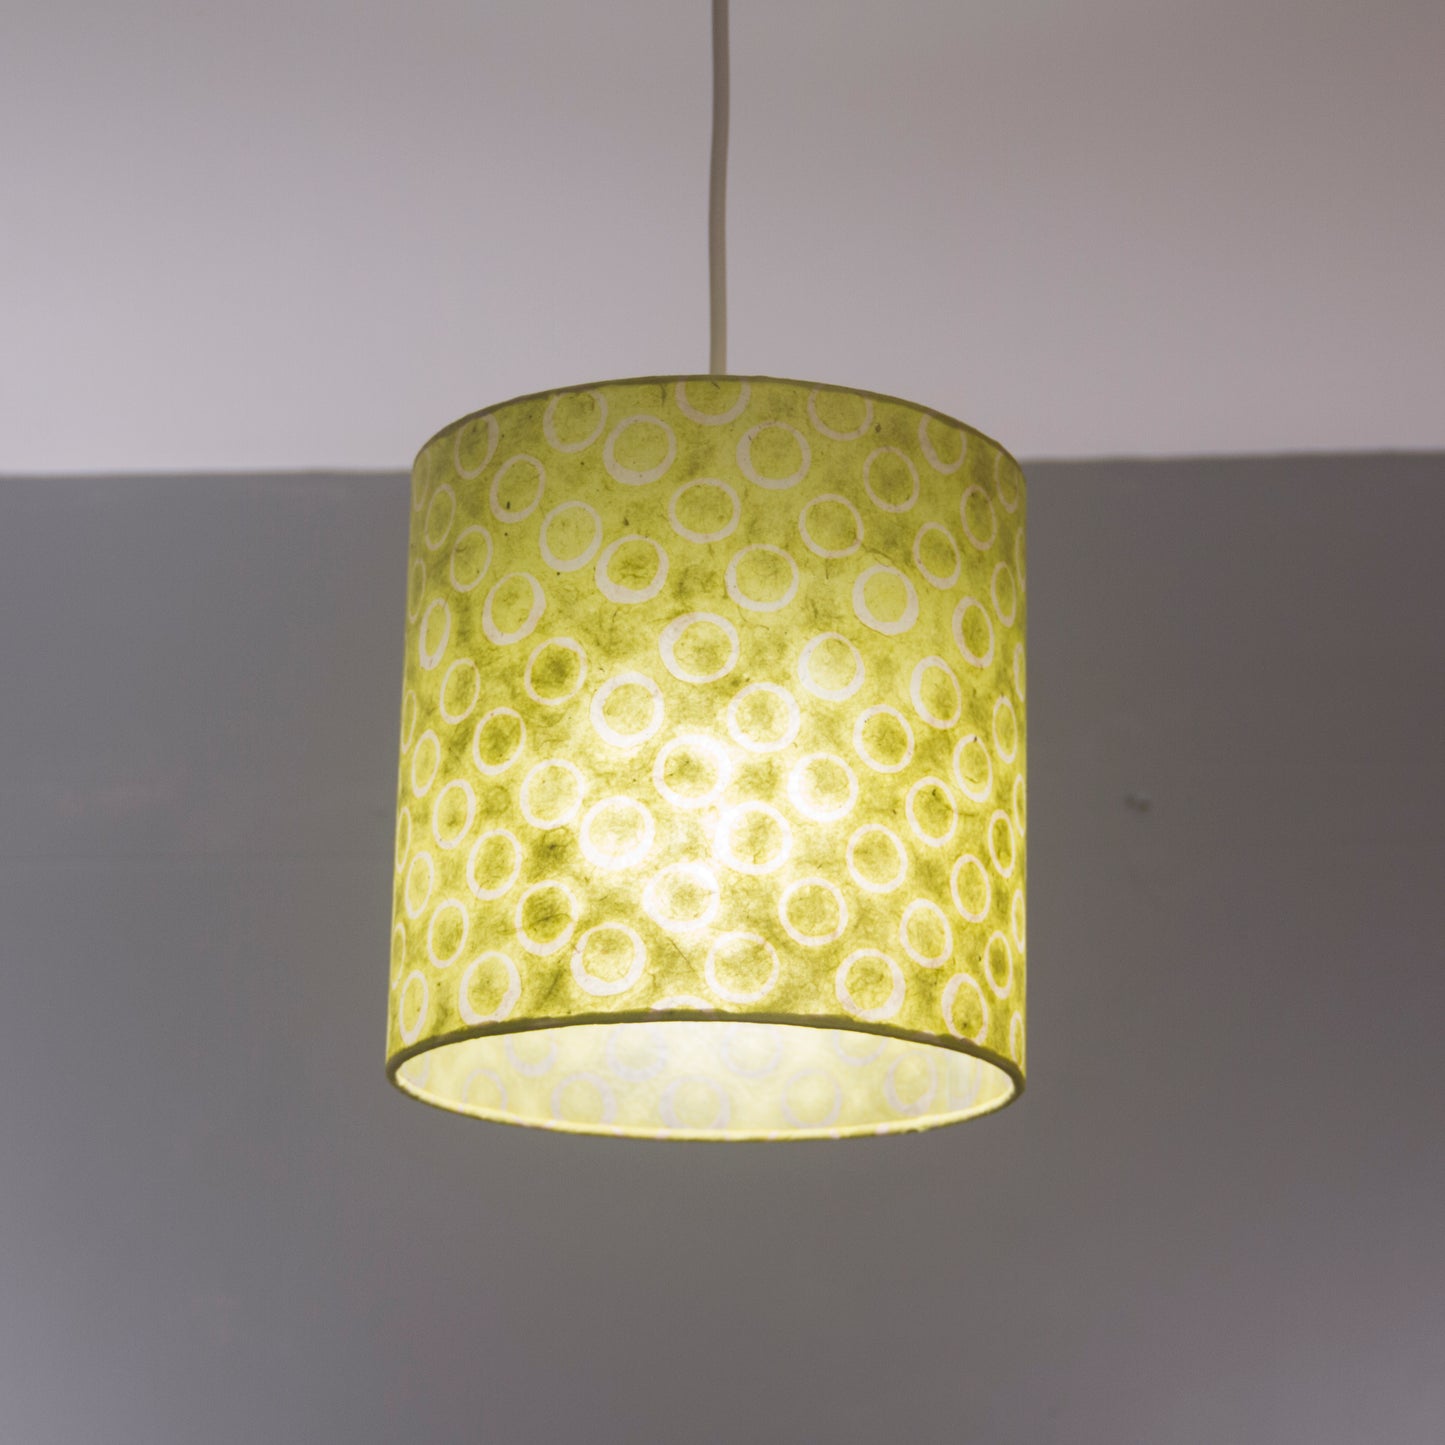 Drum Lamp Shade - P02 - Batik Lime Circles, 35cm(d) x 20cm(h)